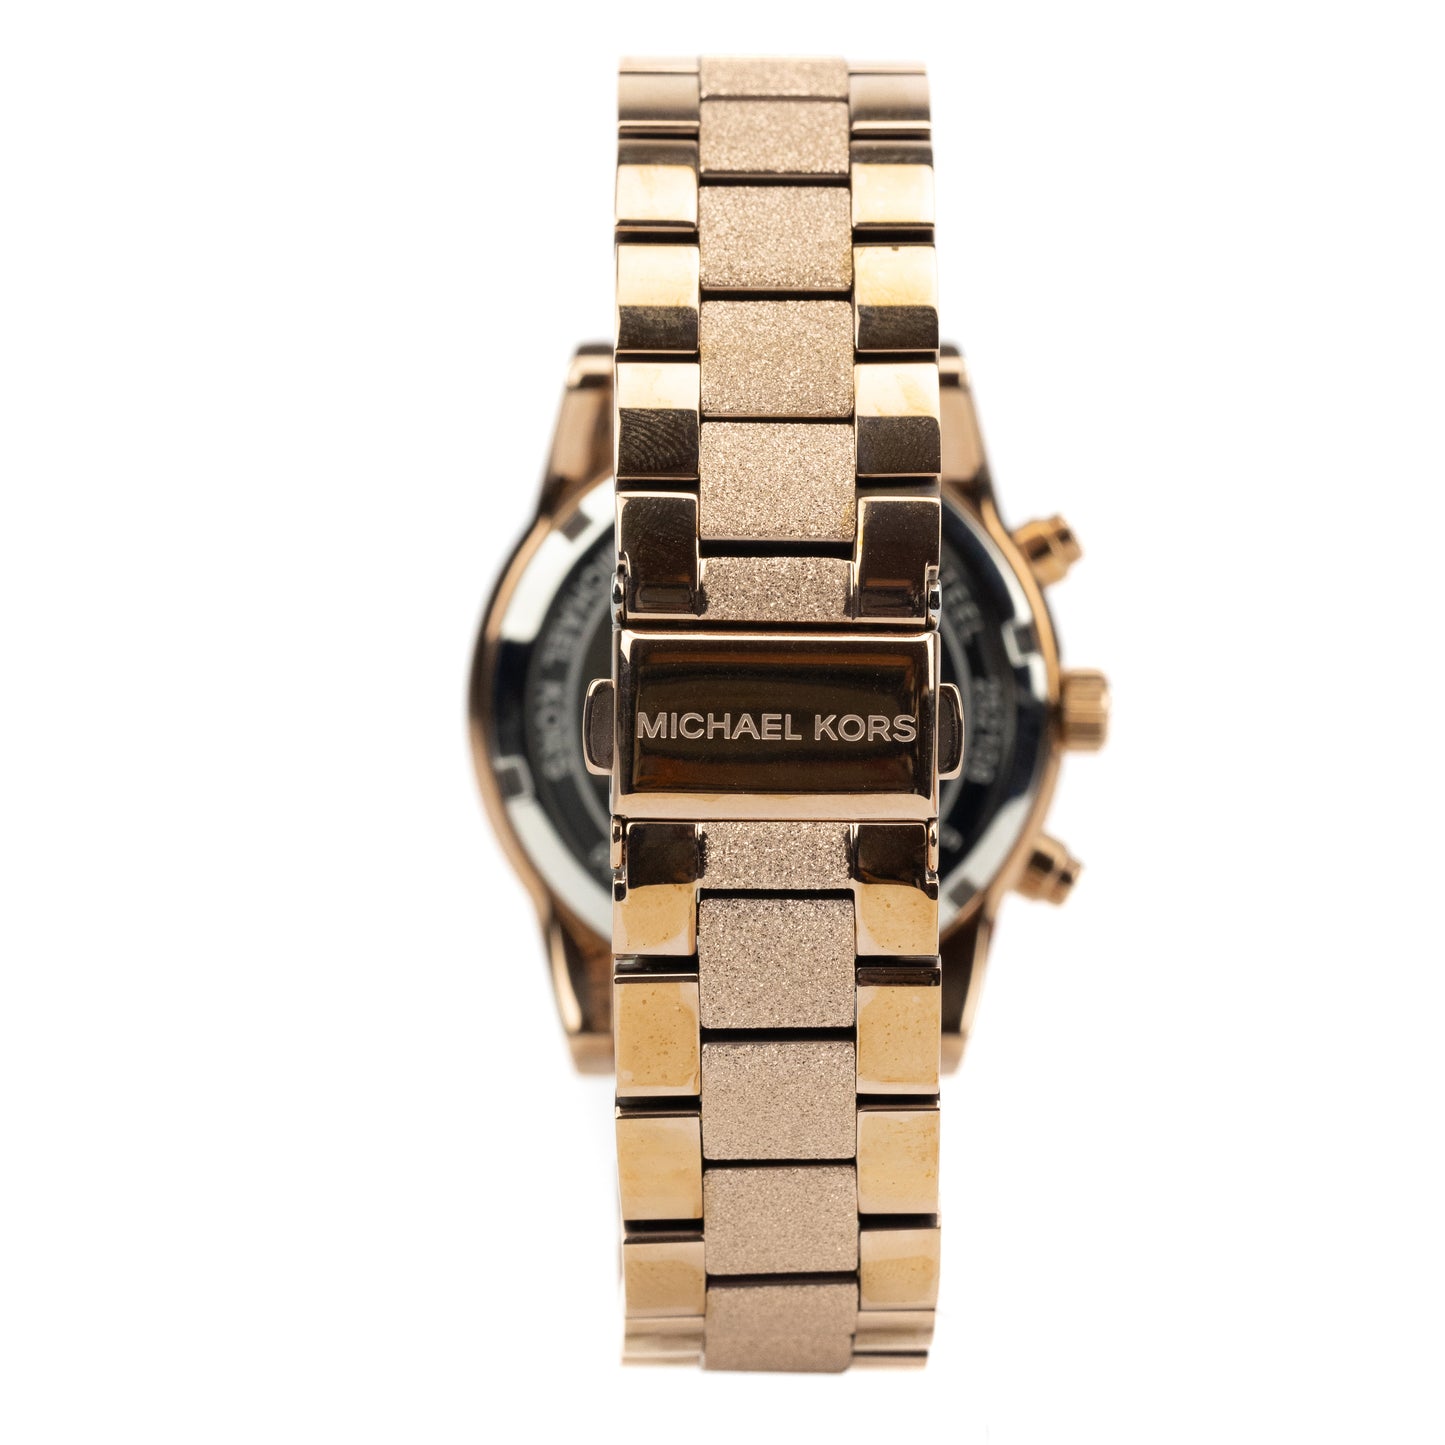 Michael Kors MK6598 Metal Stone Embellished Bezel Round Analog Watch for Women